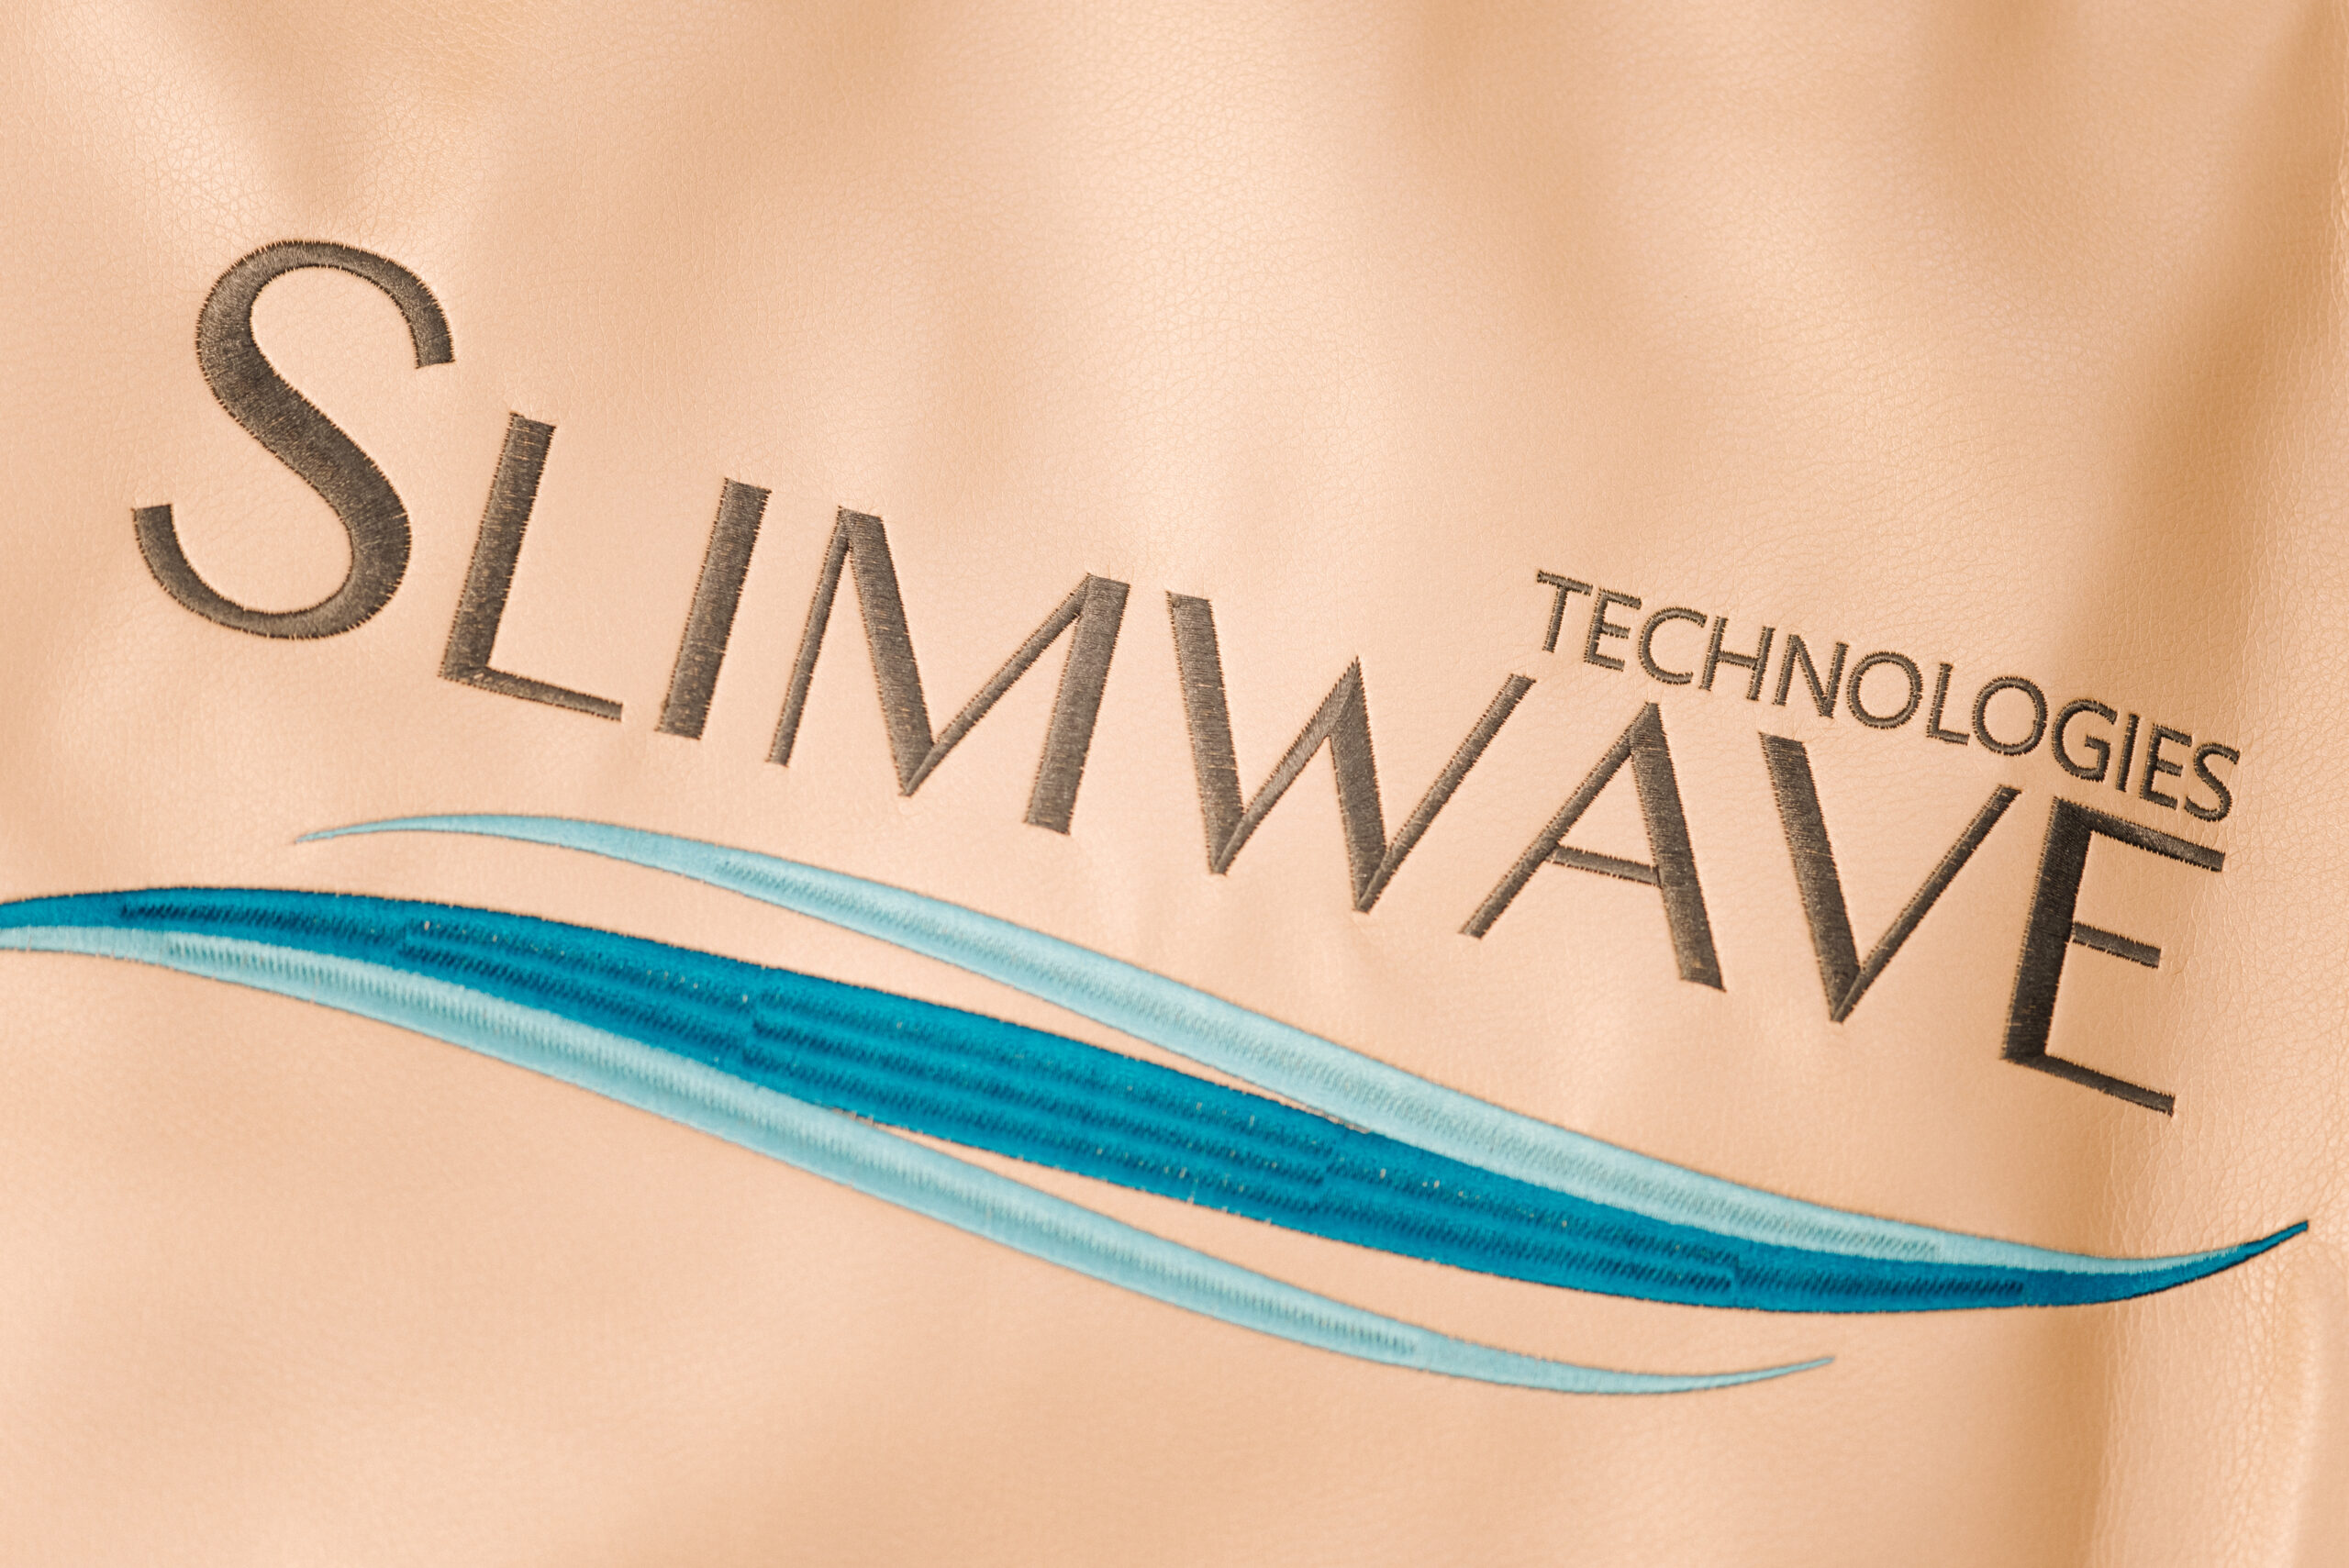 technologies Slimwave